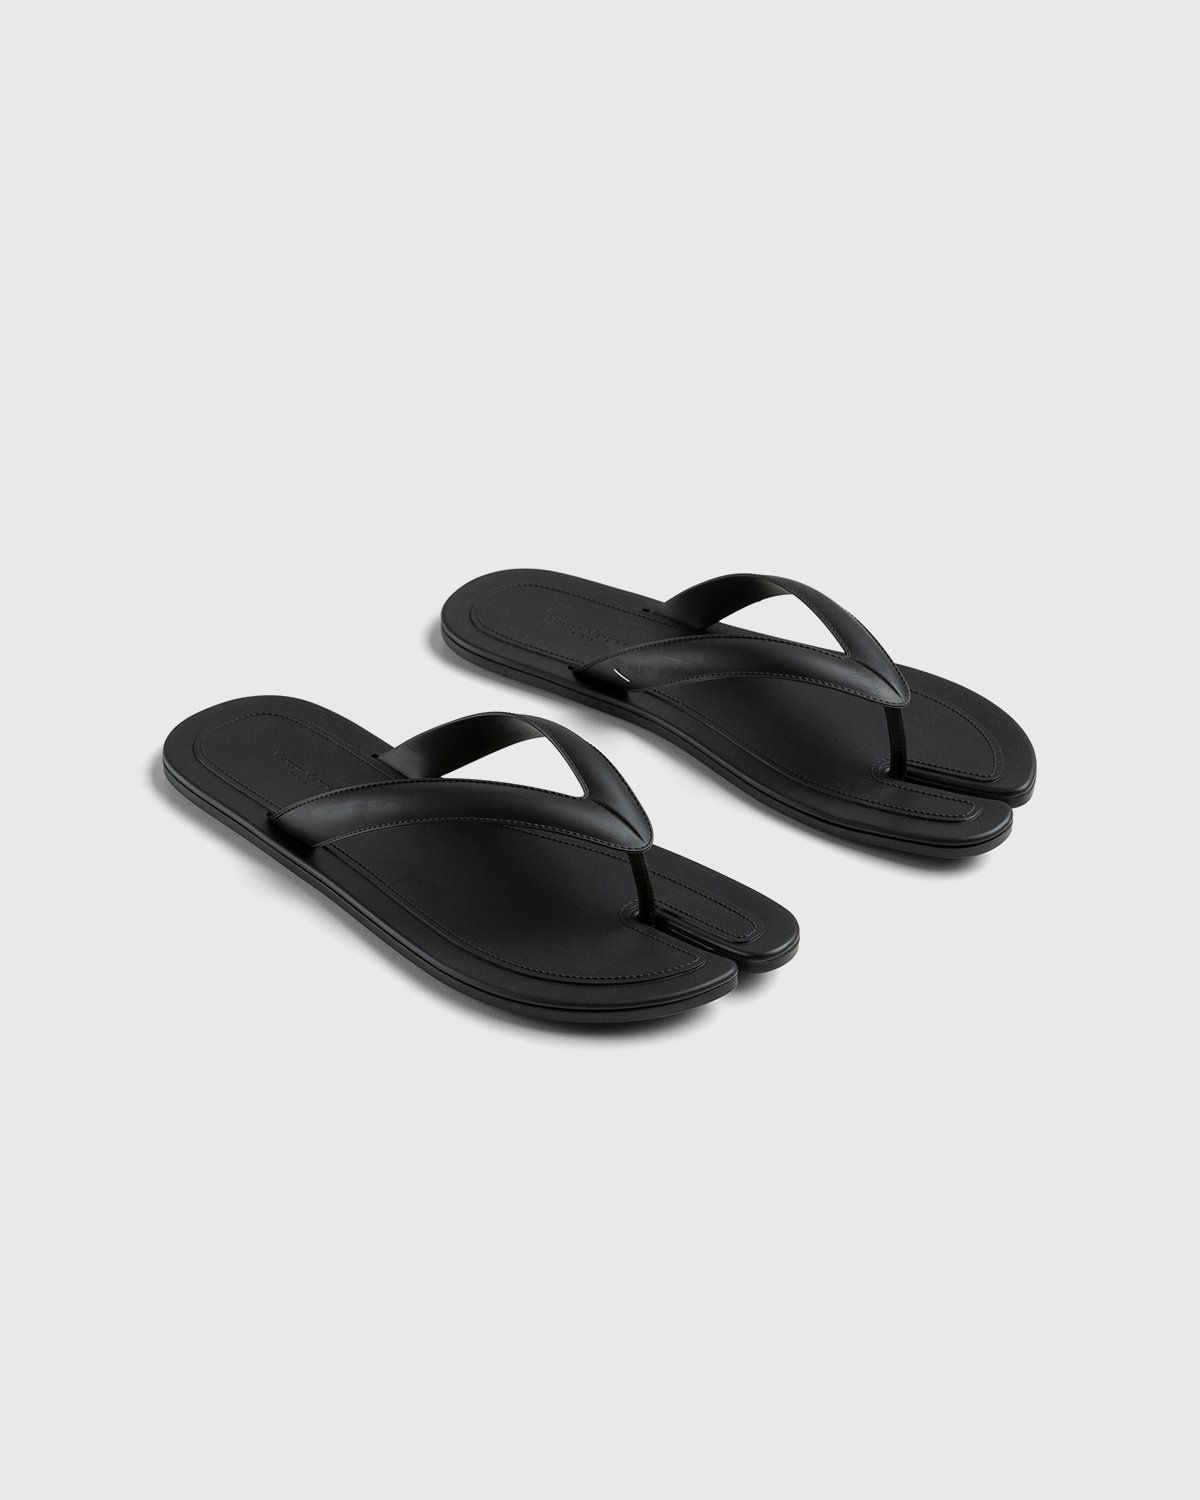 Maison Margiela - Tabi Flip-Flops Black - Footwear - Black - Image 7